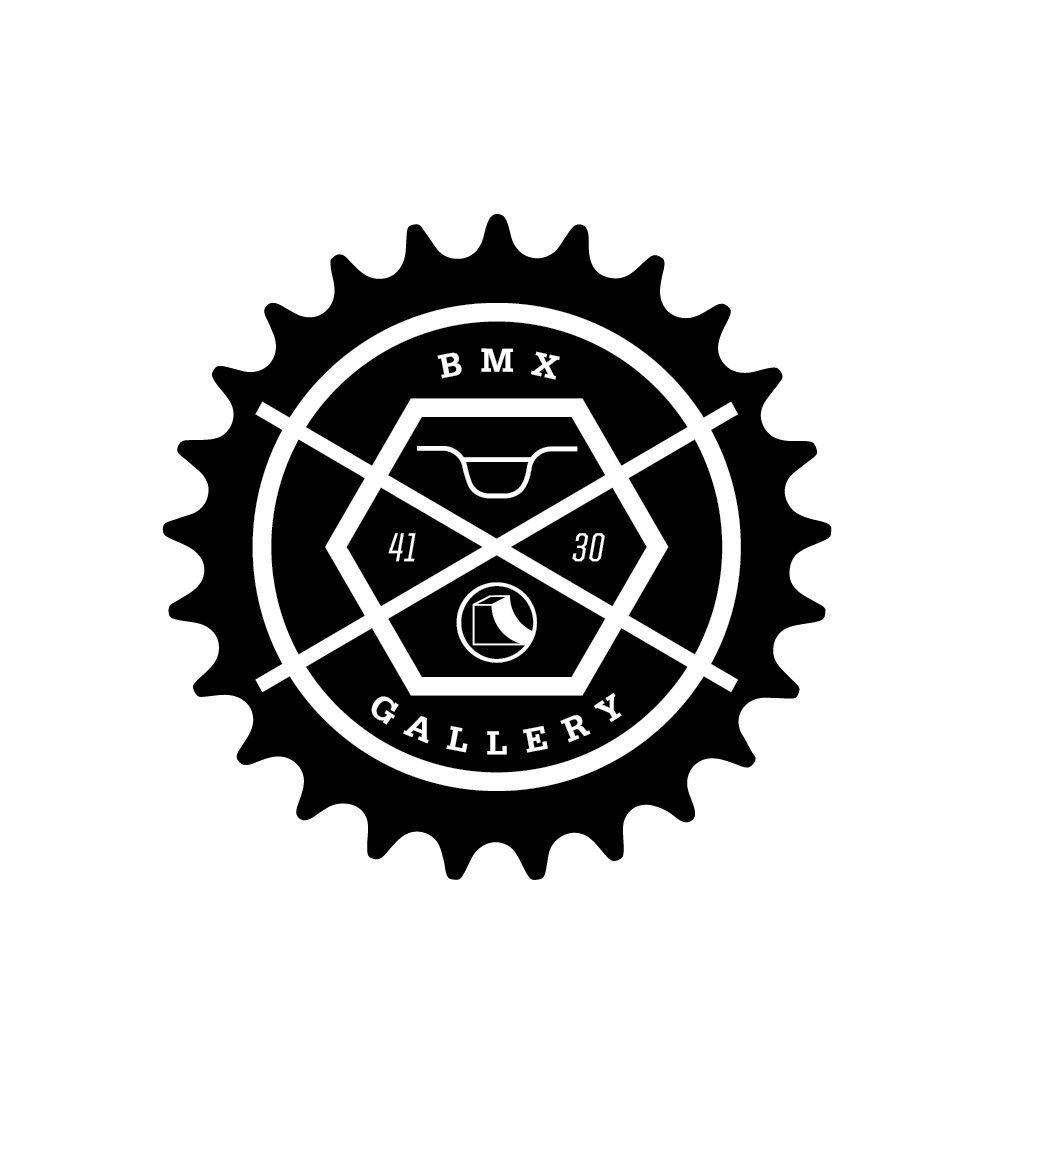 Vans BMX Logo - New BMX Store in Calgary | BMX Gallery: 4130